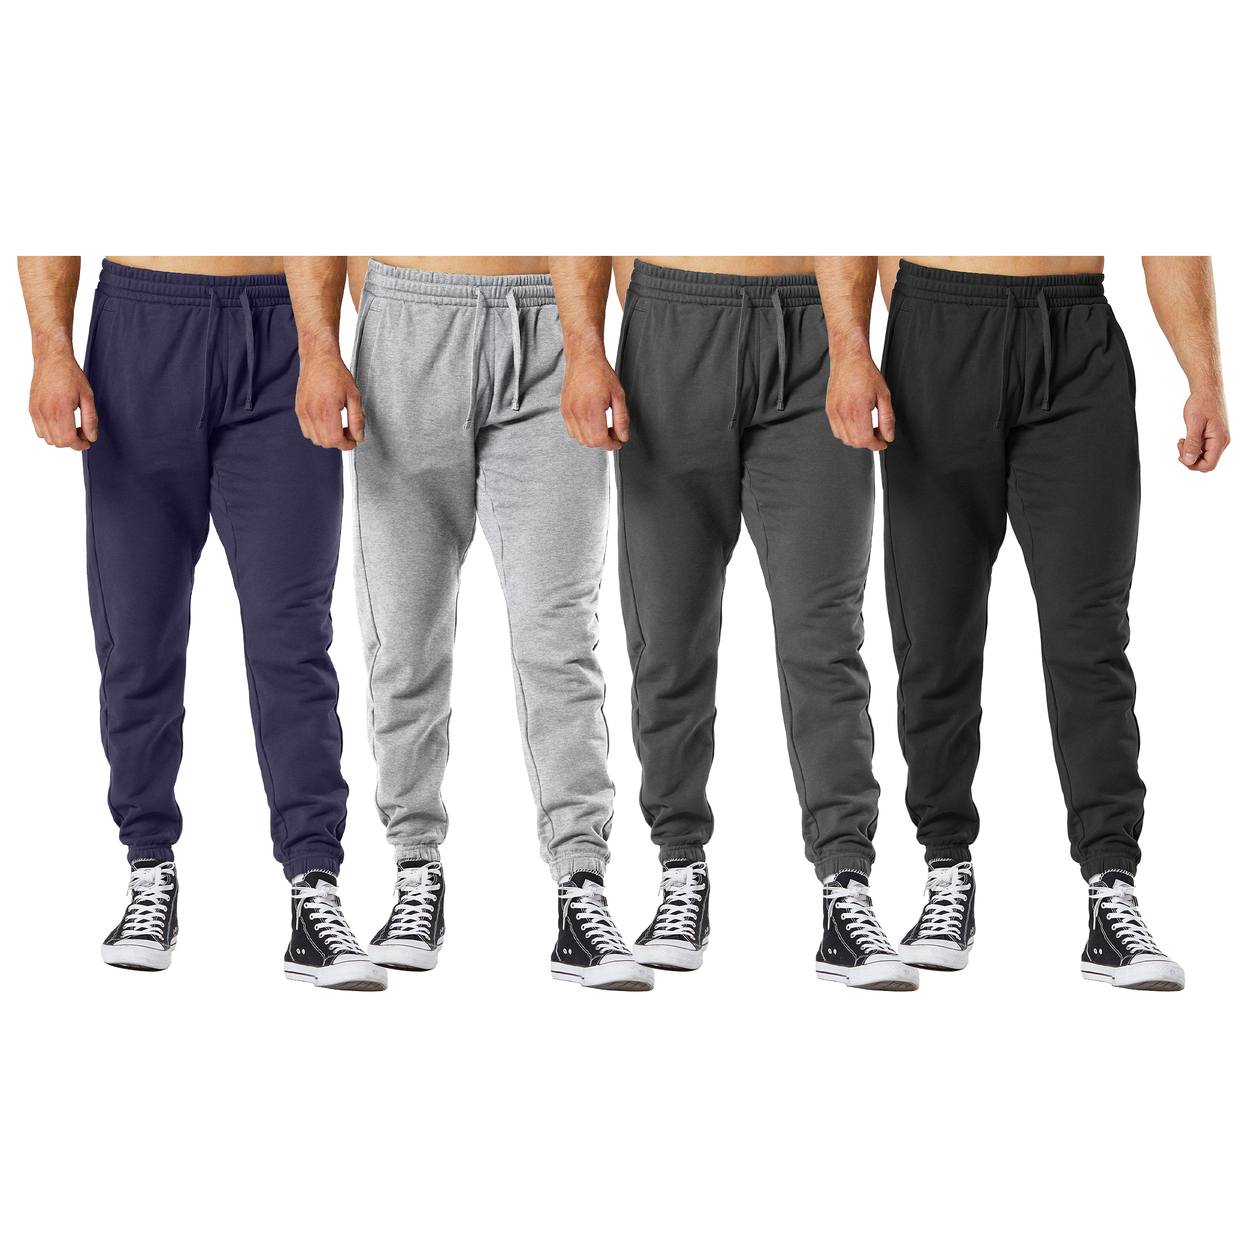 Men's Ultra-Soft Cozy Winter Warm Casual Fleece Lined Sweatpants Jogger - Black, X-large